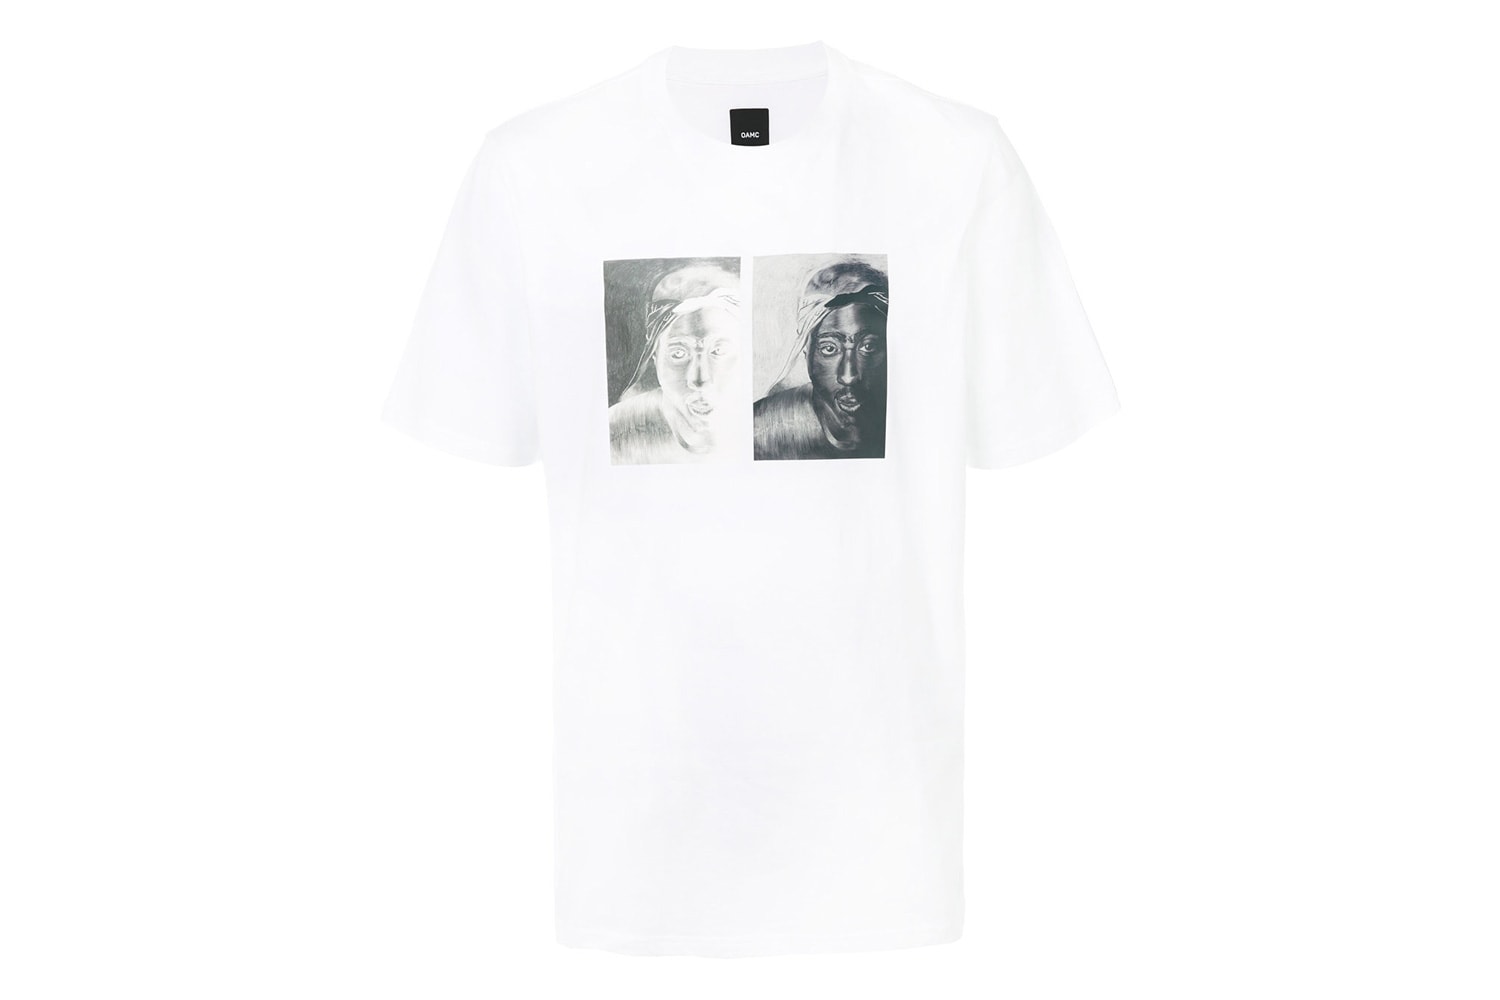 Tupac 2PAC Shakur Notorious B.I.G. Biggie t-shirts oamc union los angeles rappers shirts tops clothing fashion style